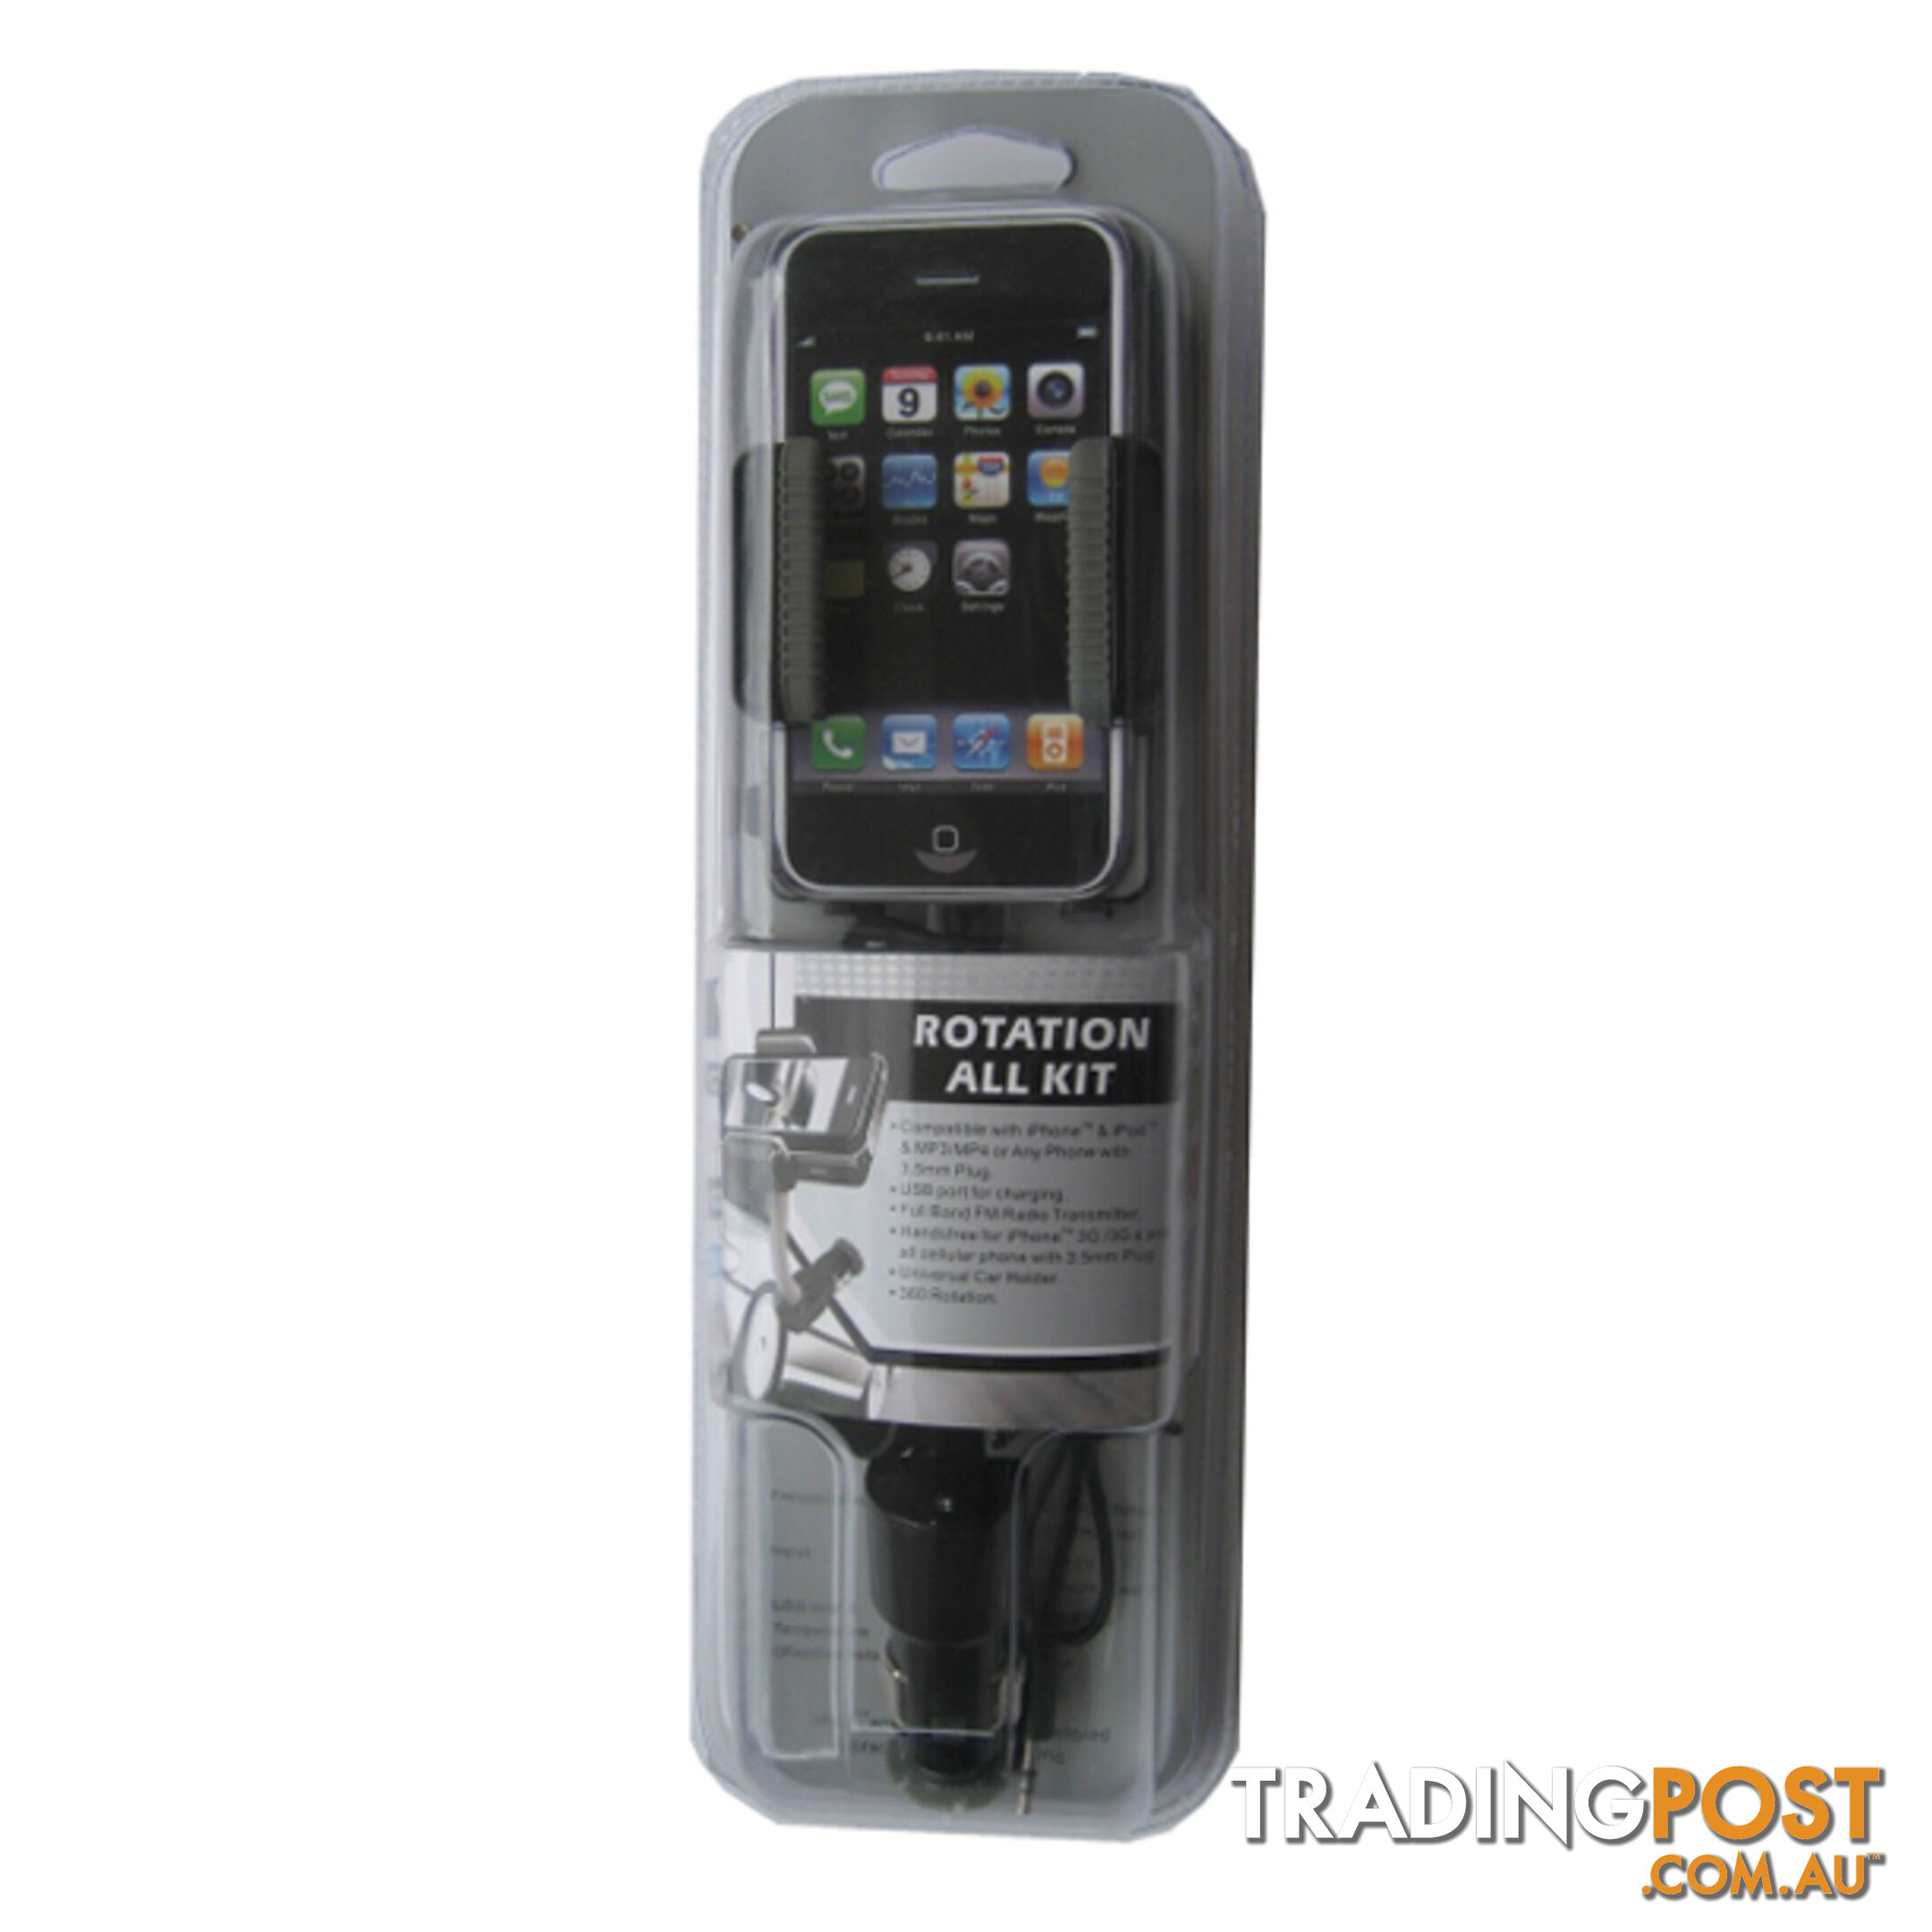 Allkit iPod/iPhone Handsfree Car Kit & FM Transmitter